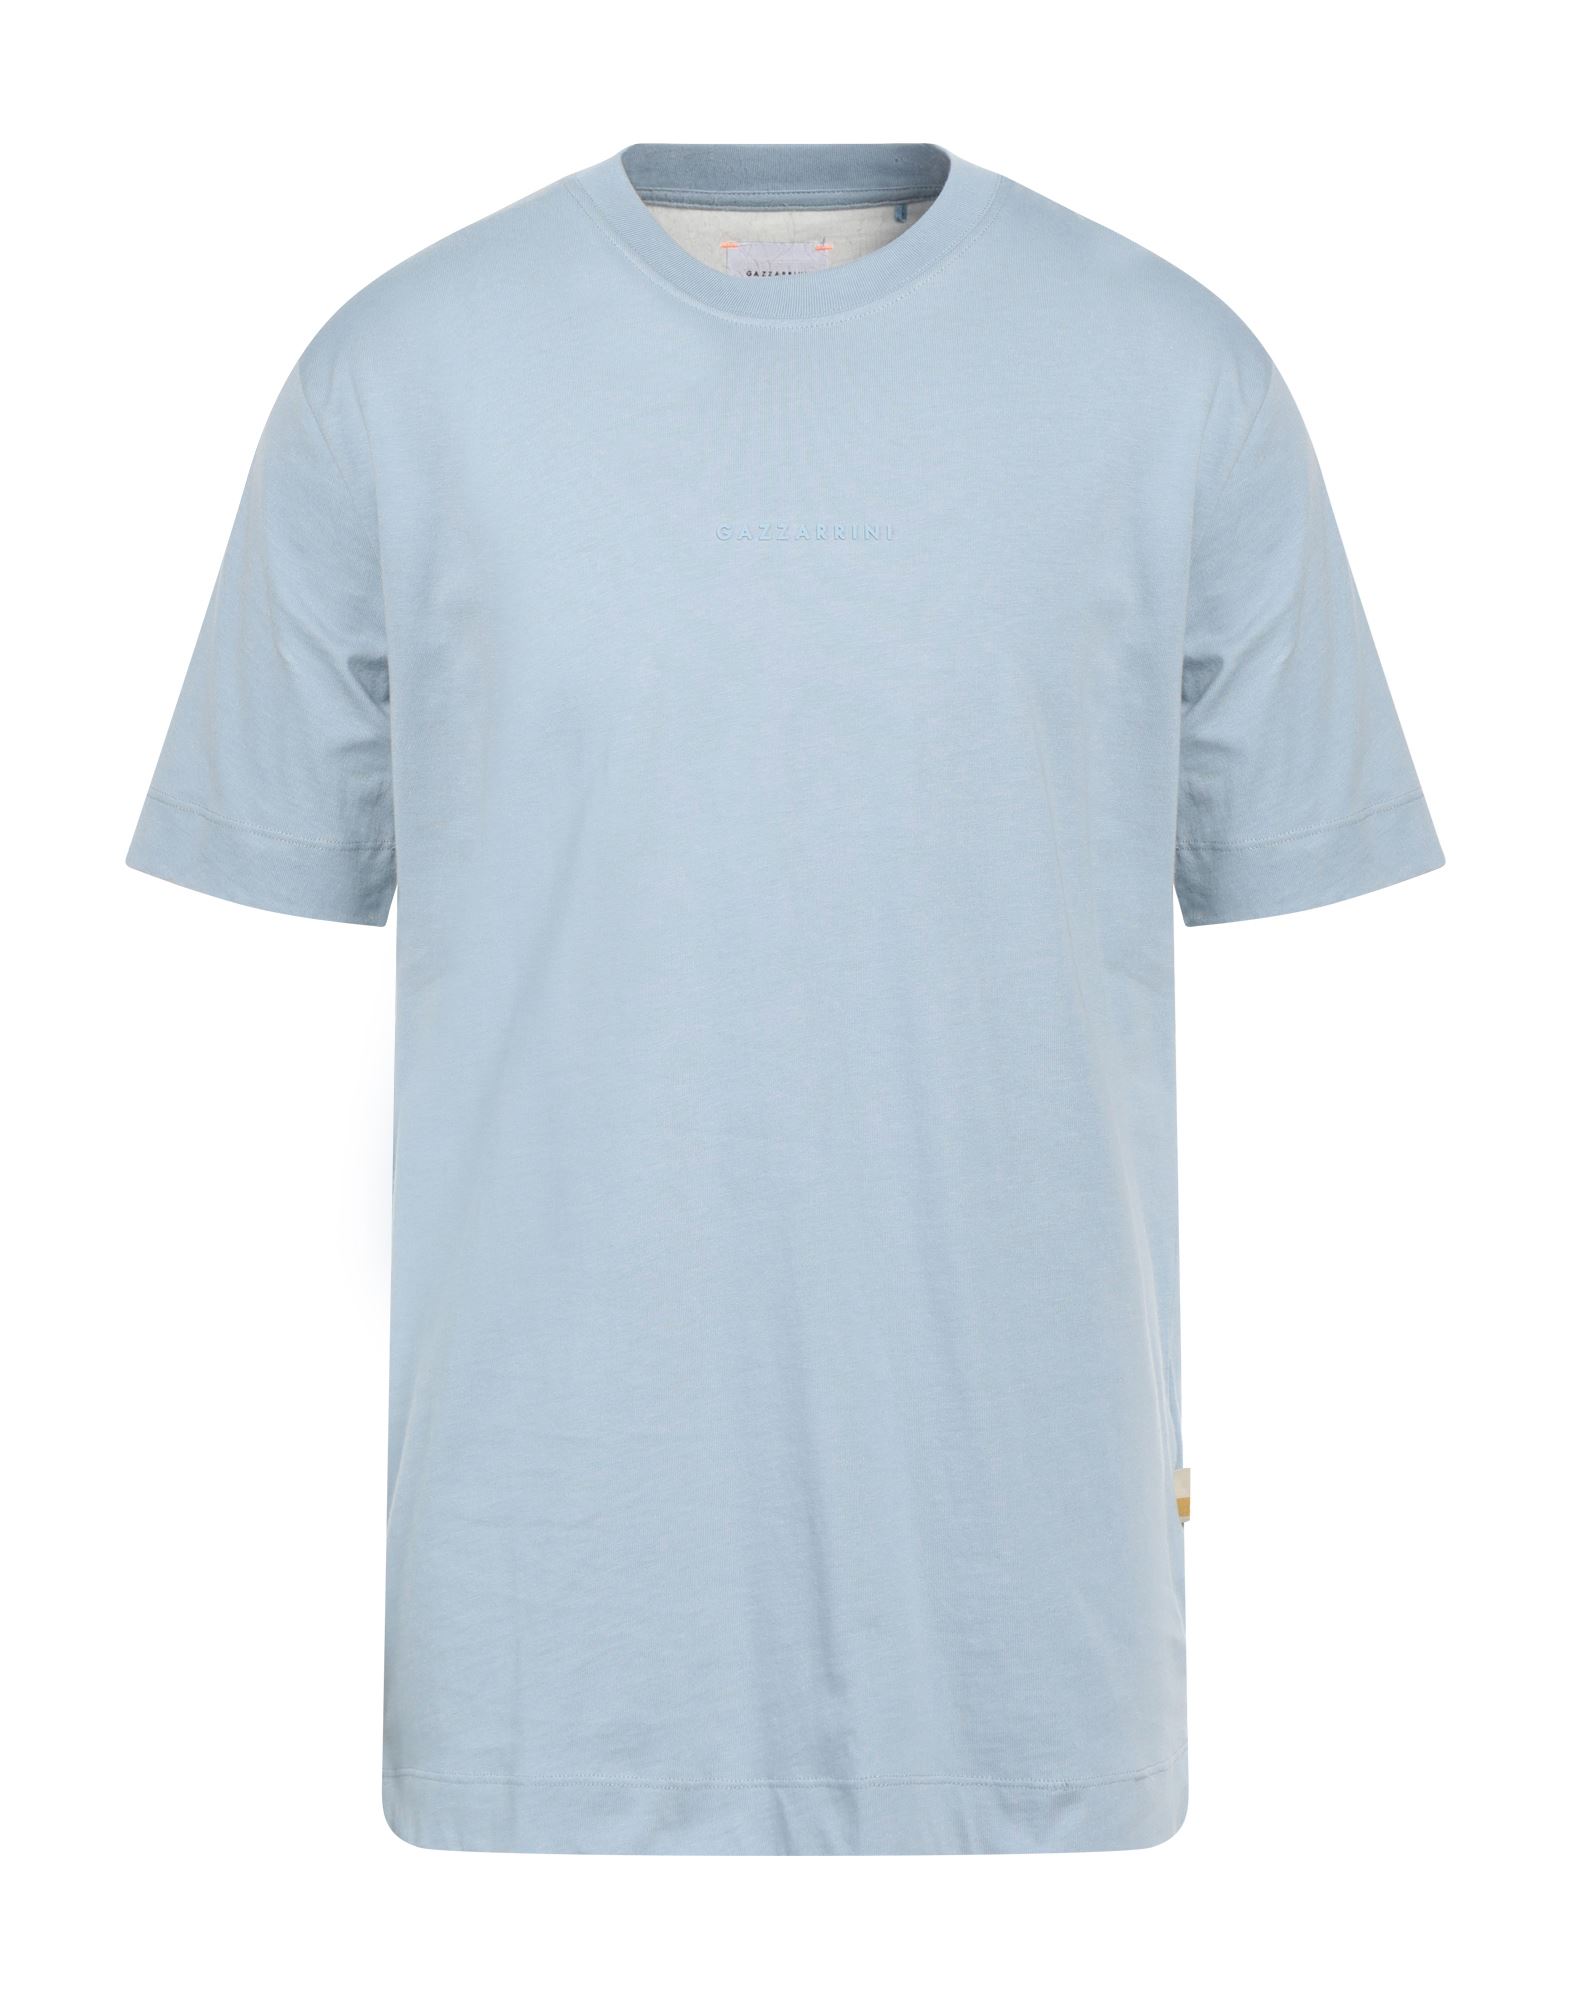 Gazzarrini T-shirts In Pastel Blue